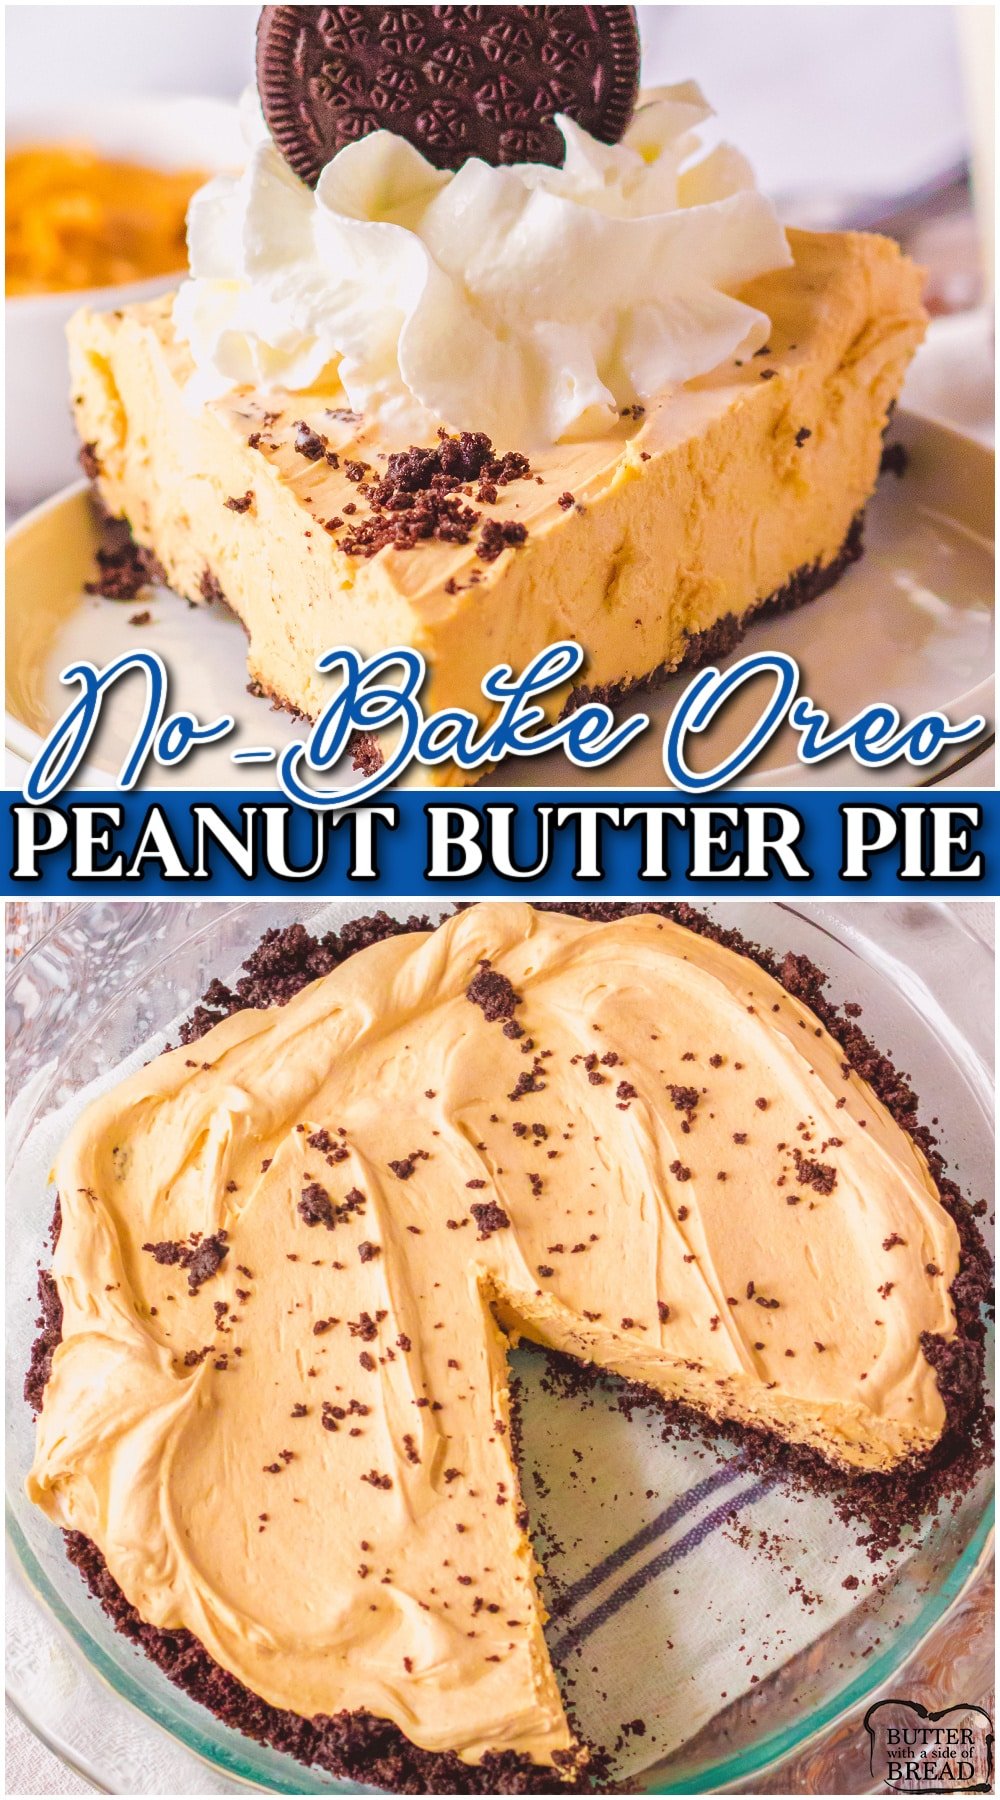 Oreo Peanut Butter Pie is a light & dreamy cream pie perfect for peanut butter lovers! Our peanut butter pie with Oreo crust combines peanut butter, cream cheese & whipped cream into a sensational no-bake dessert!